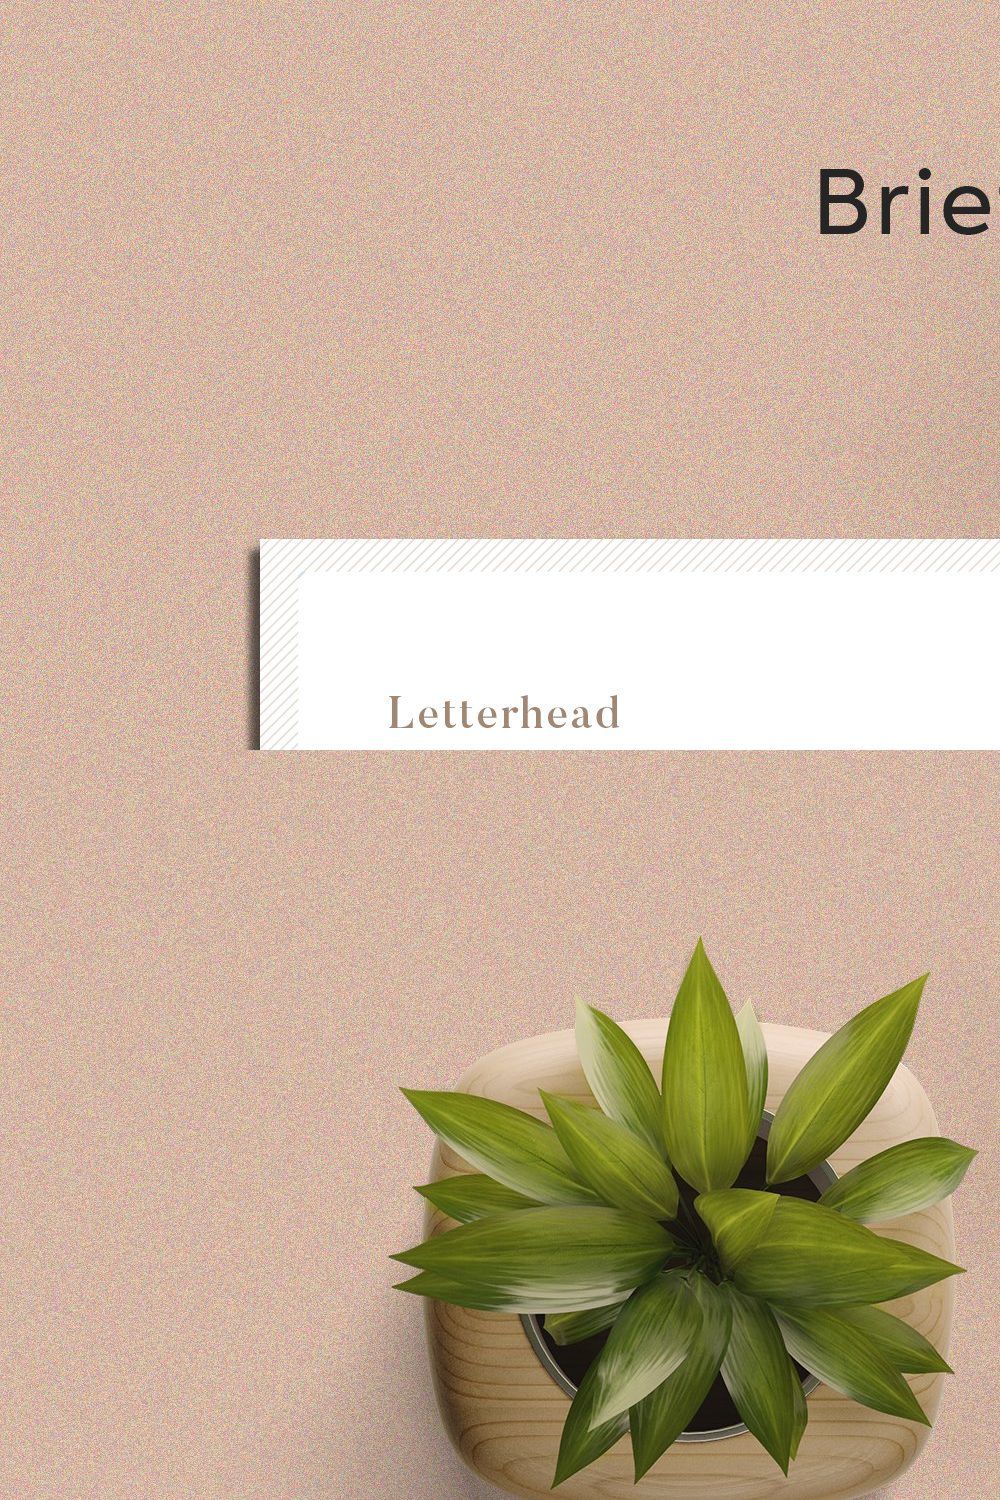 Invoice | Estimate | Letterhead pinterest preview image.